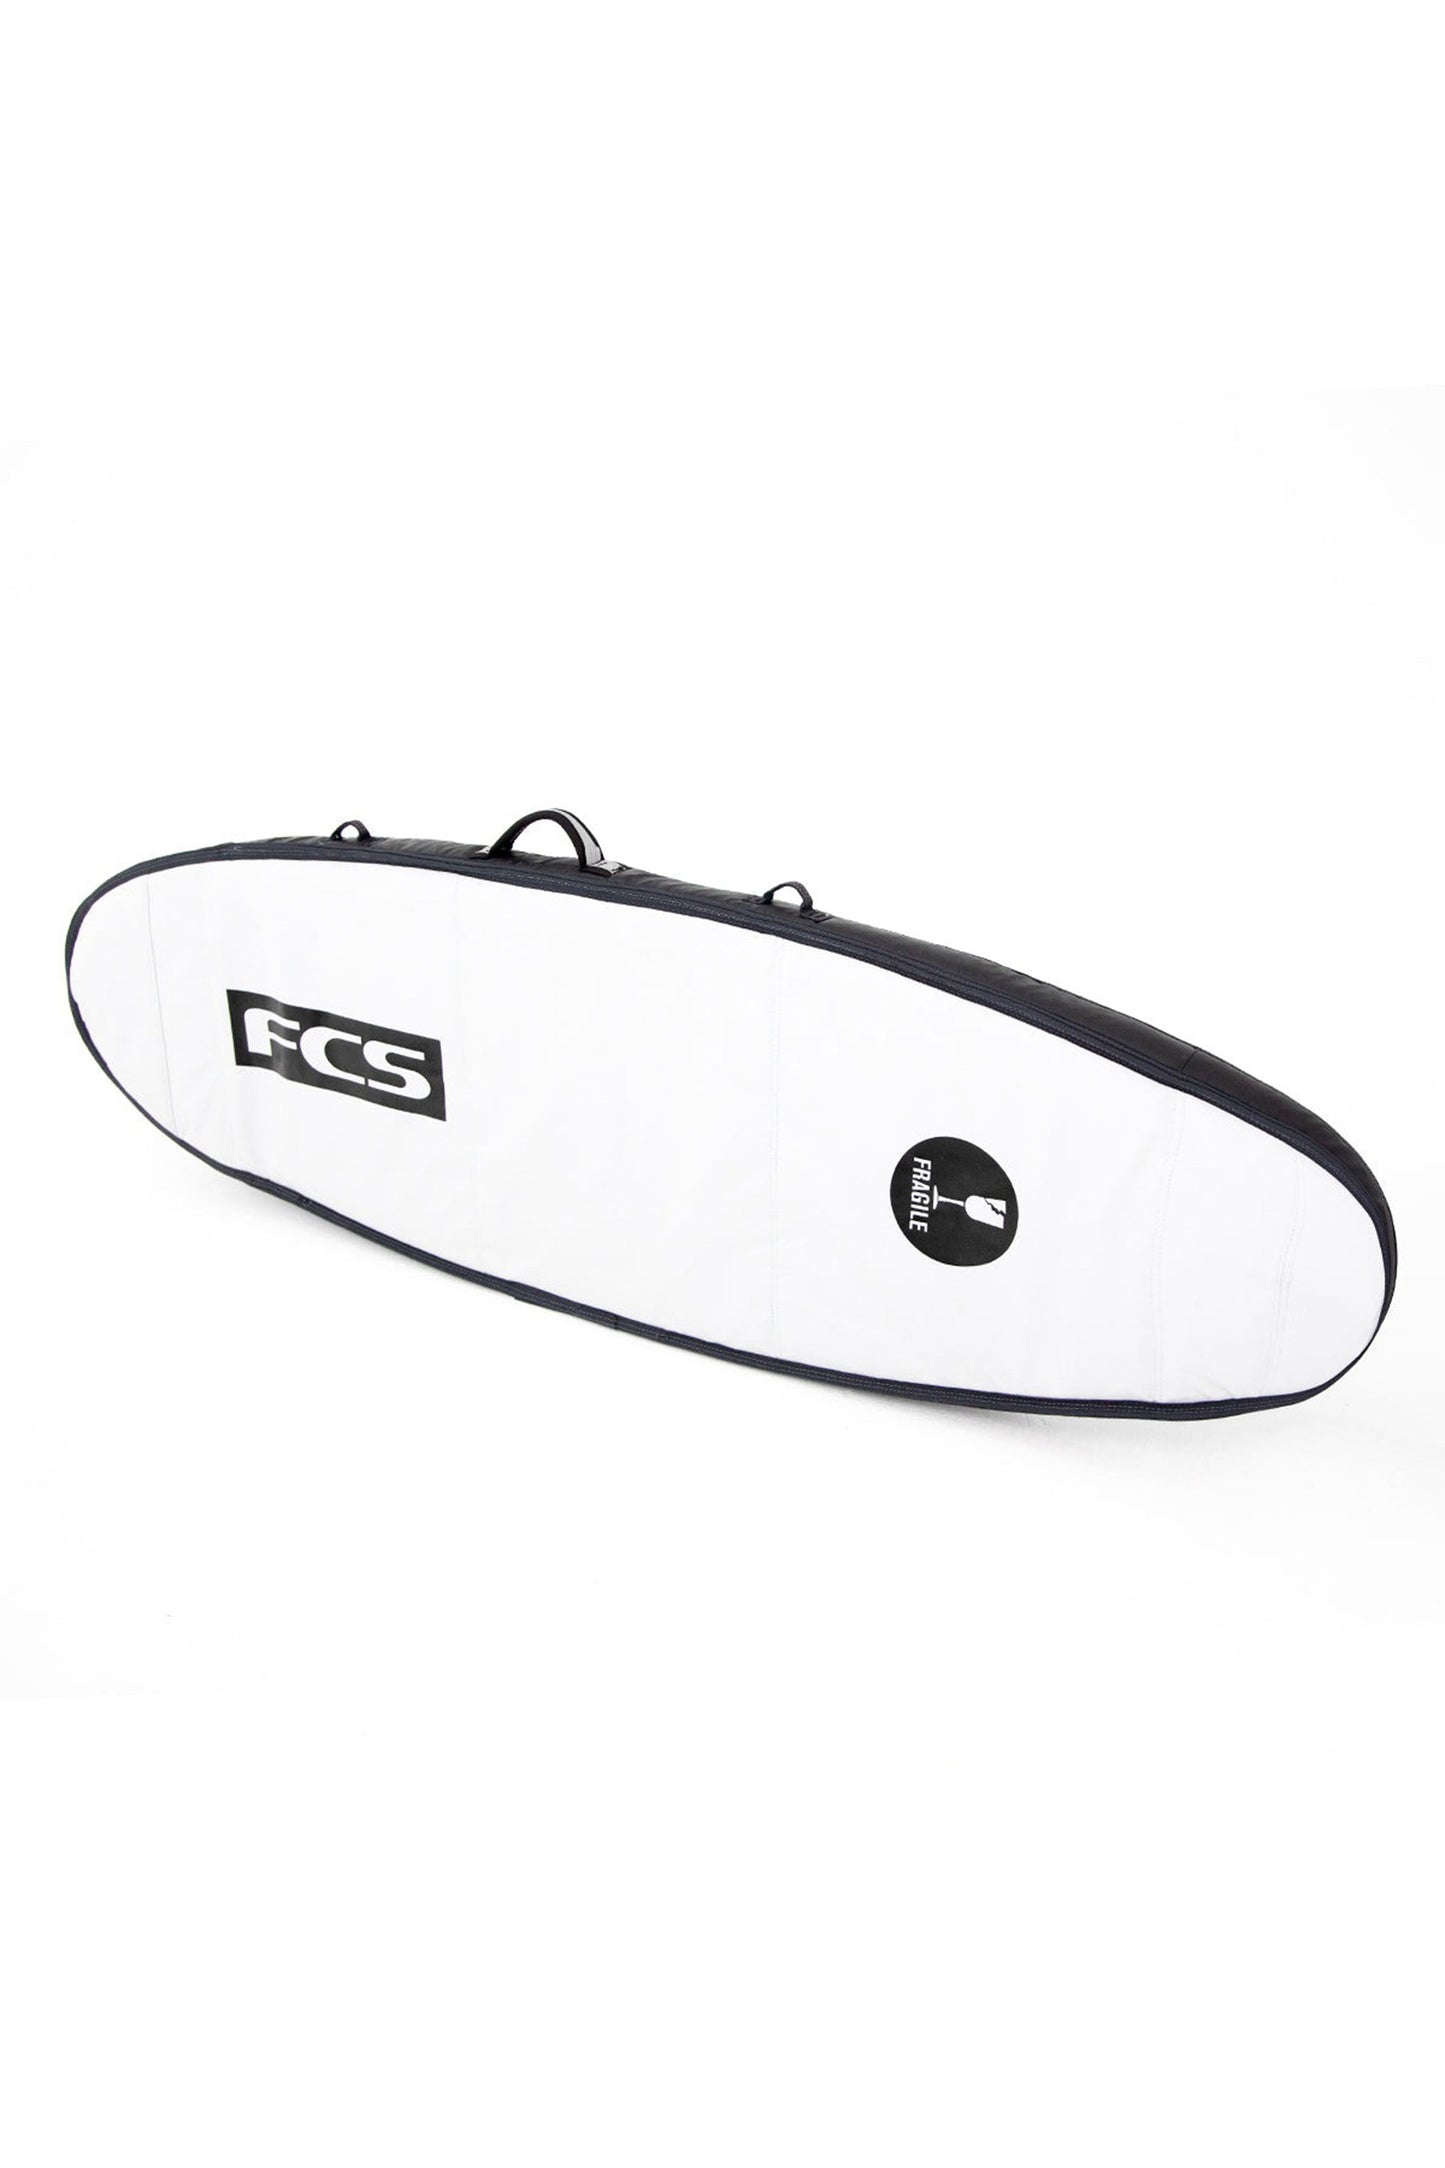    Pukas-Surf-Shop-FCS-Boardbags-Travel-Fun-board-Black